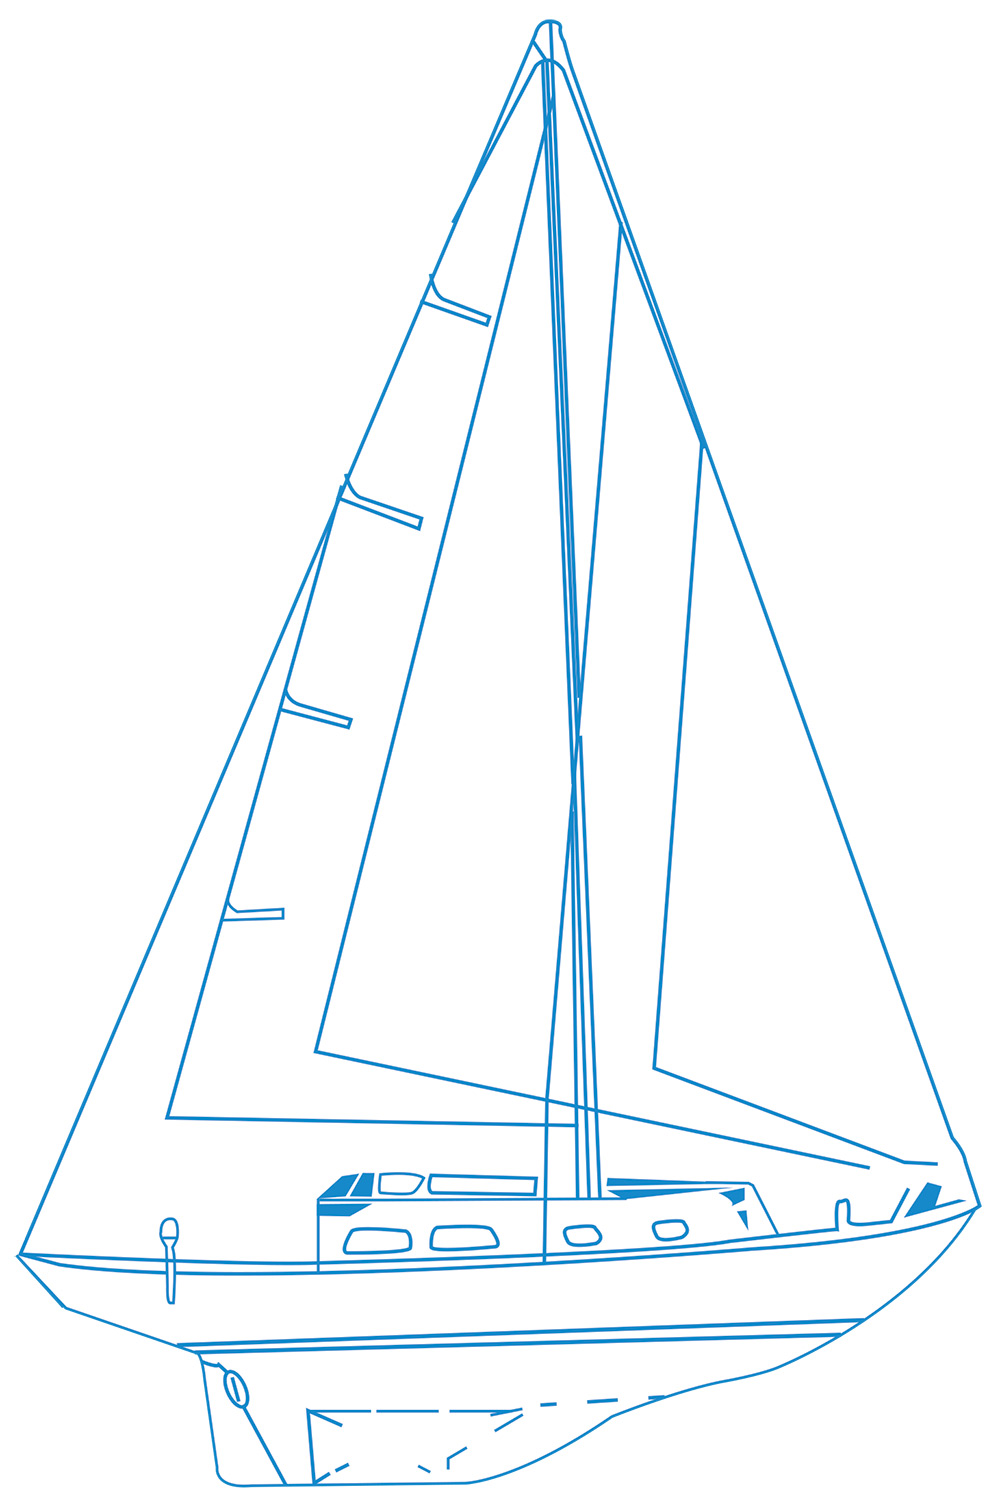 32 foot bristol sailboat